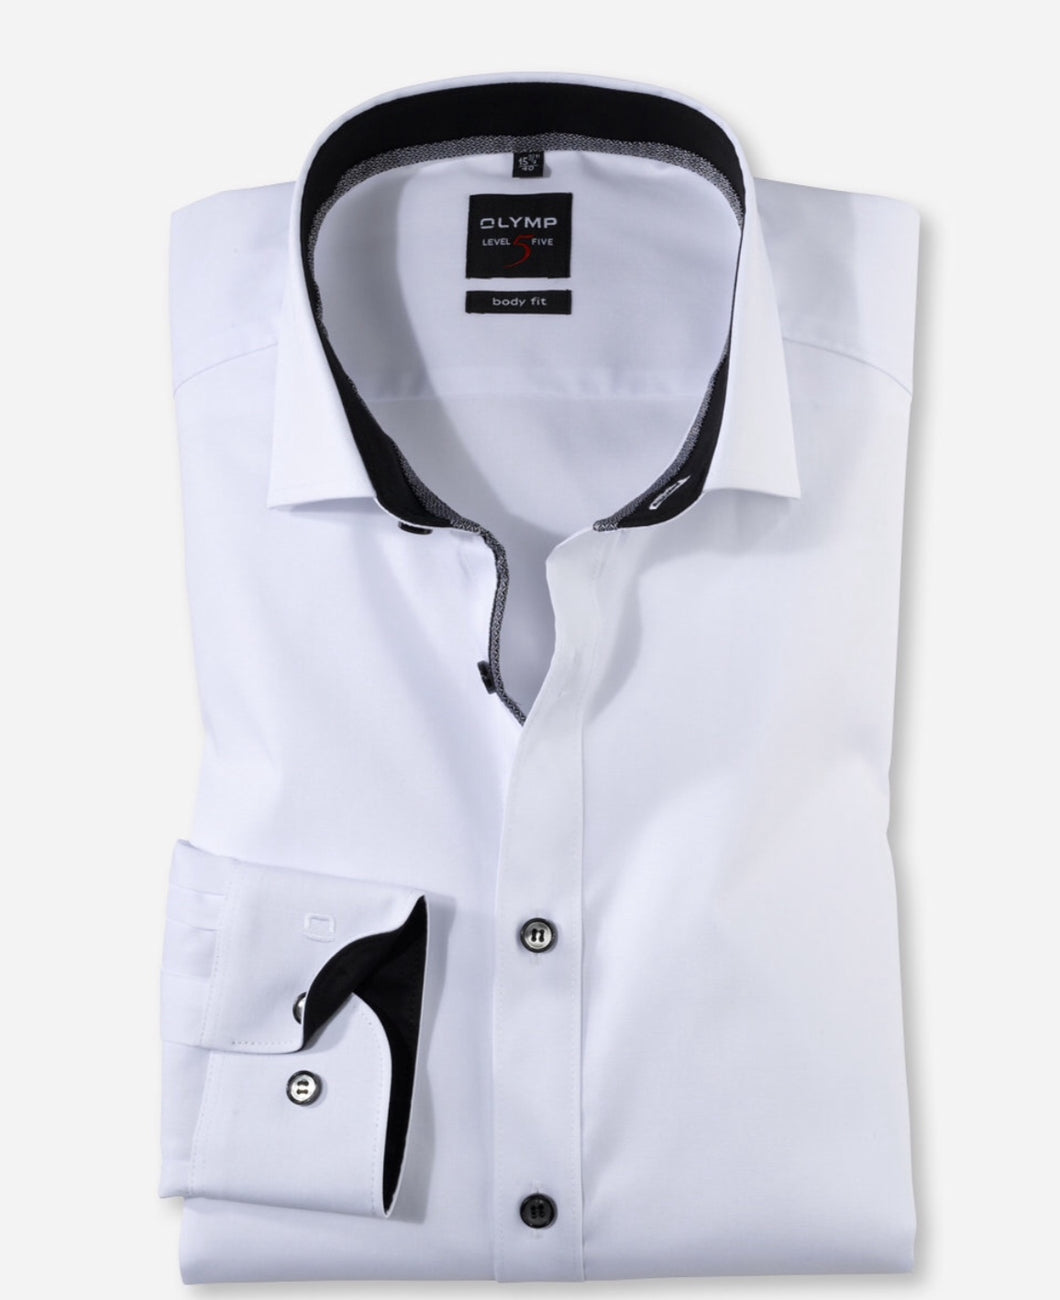 Olymp long sleeve white dress shirt